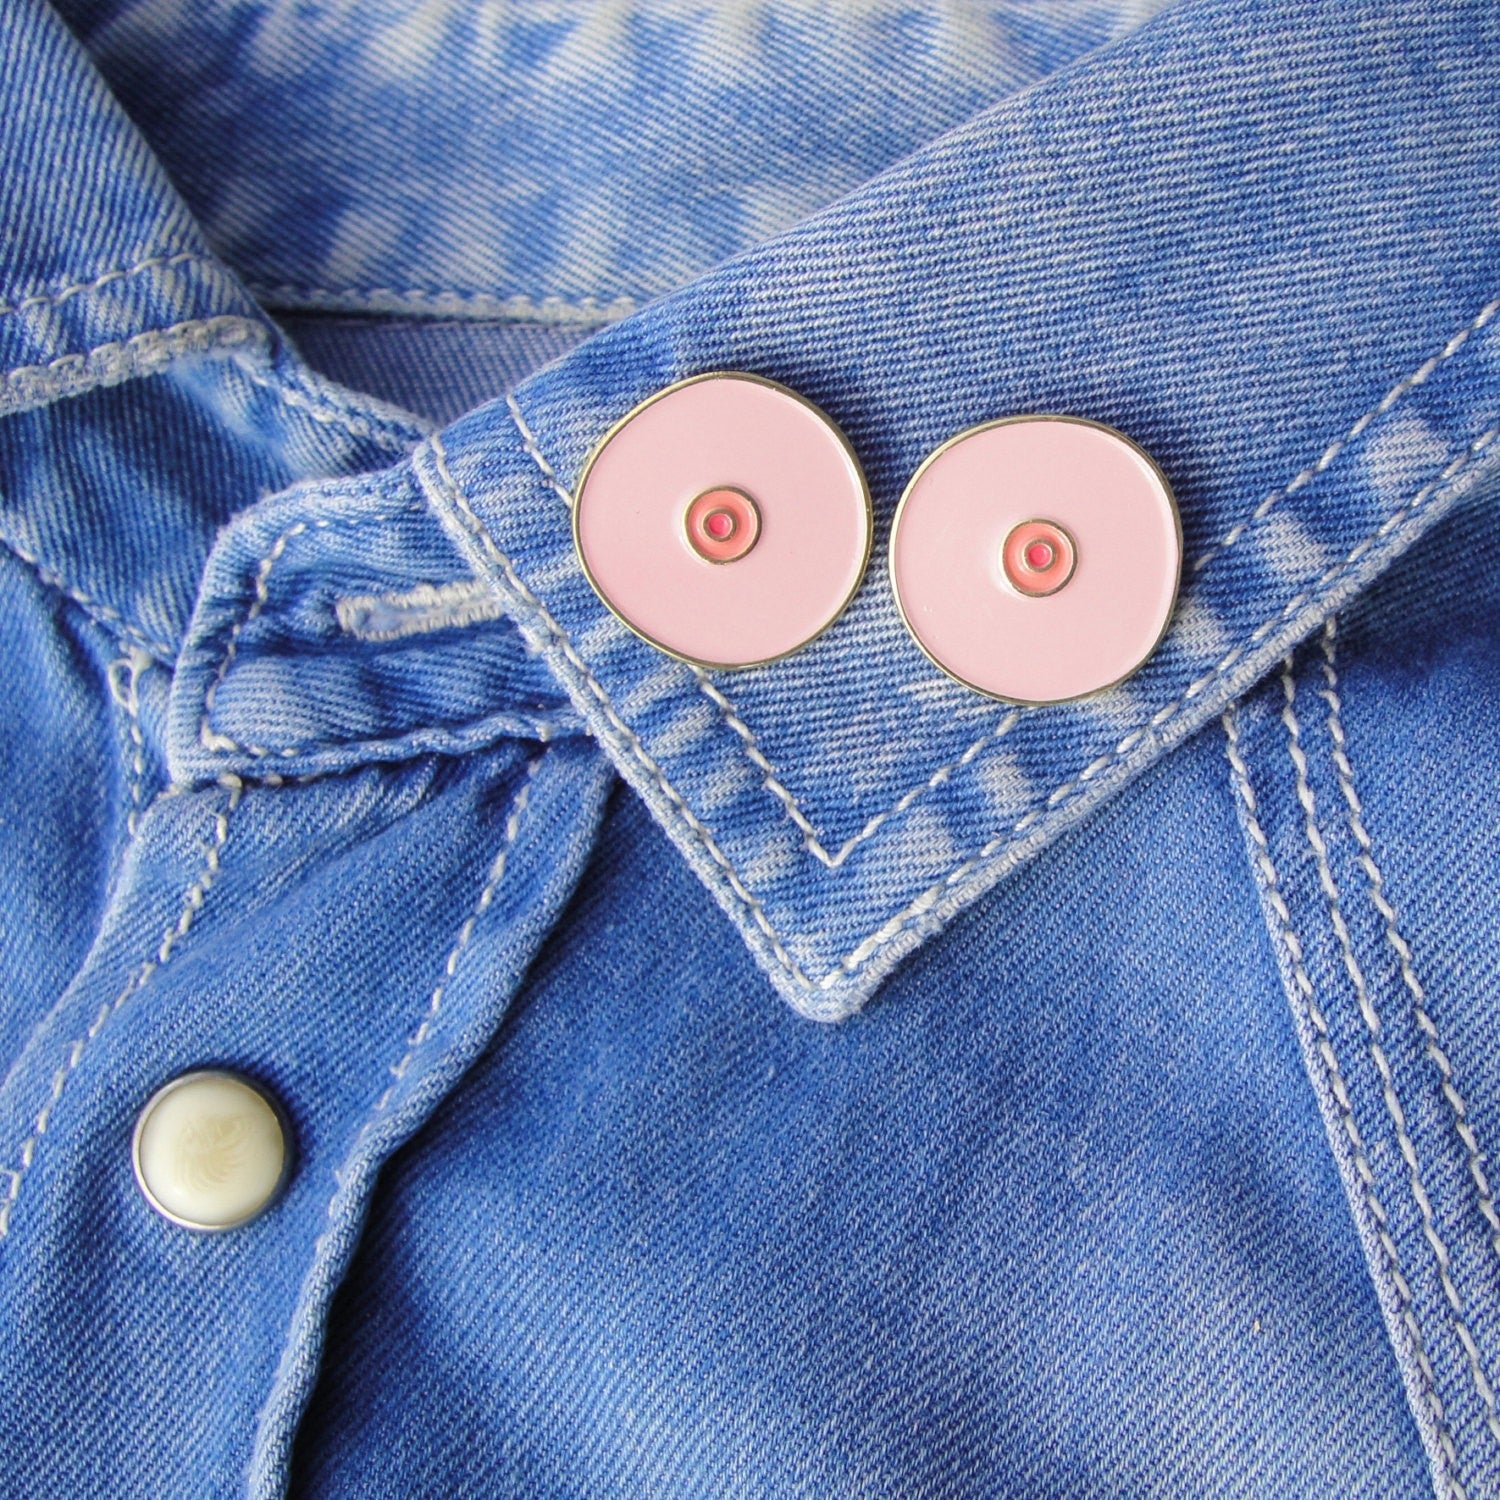 Boobs Buttons & Pins, Unique Designs